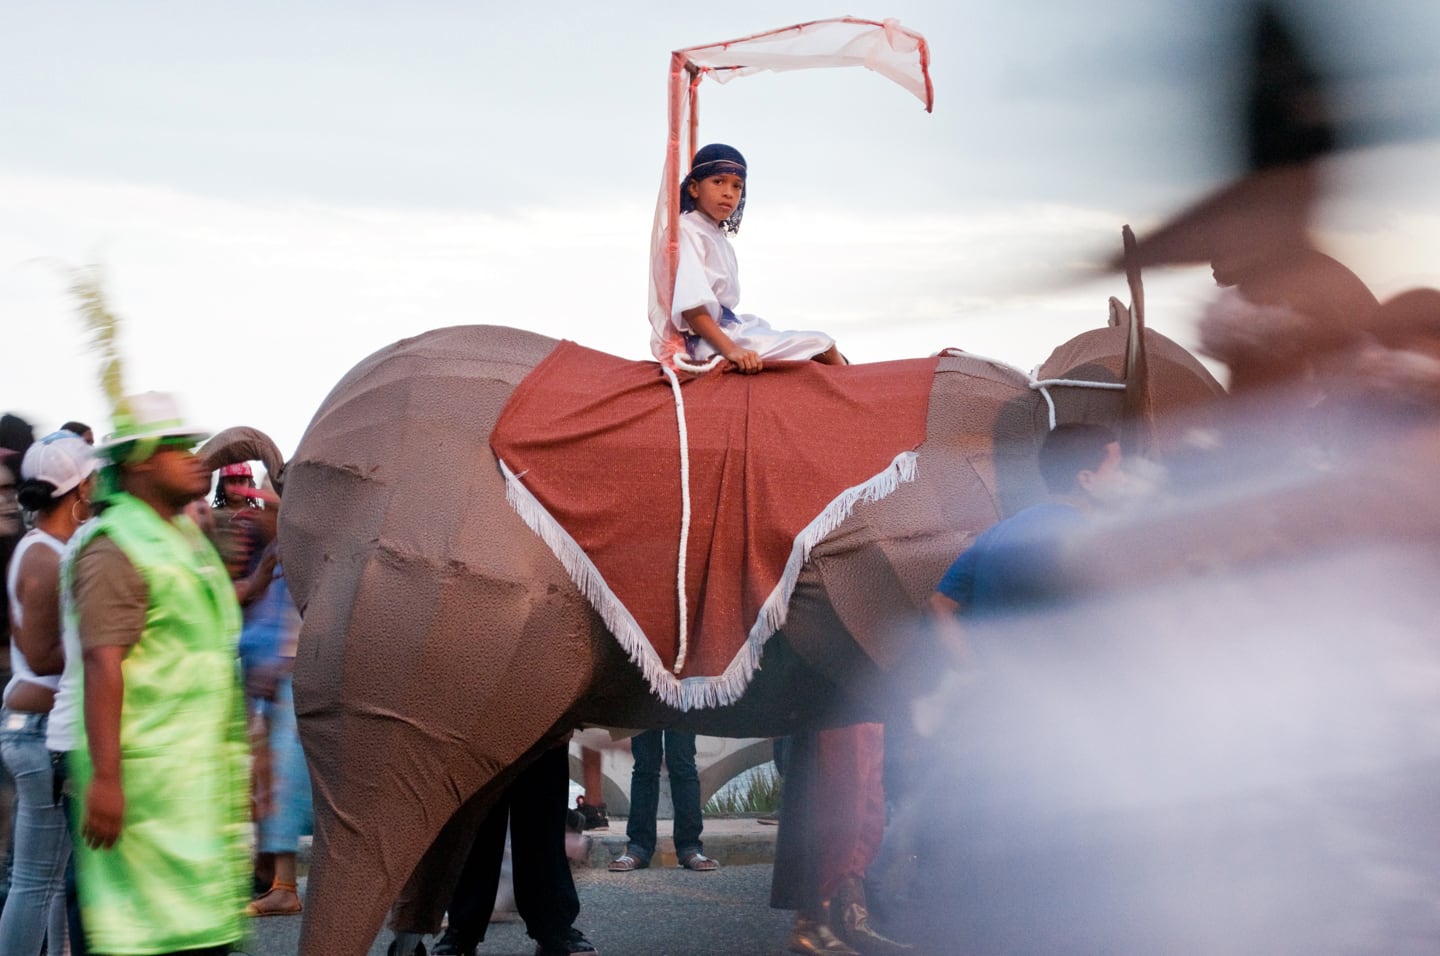 boy riding elephant in costume